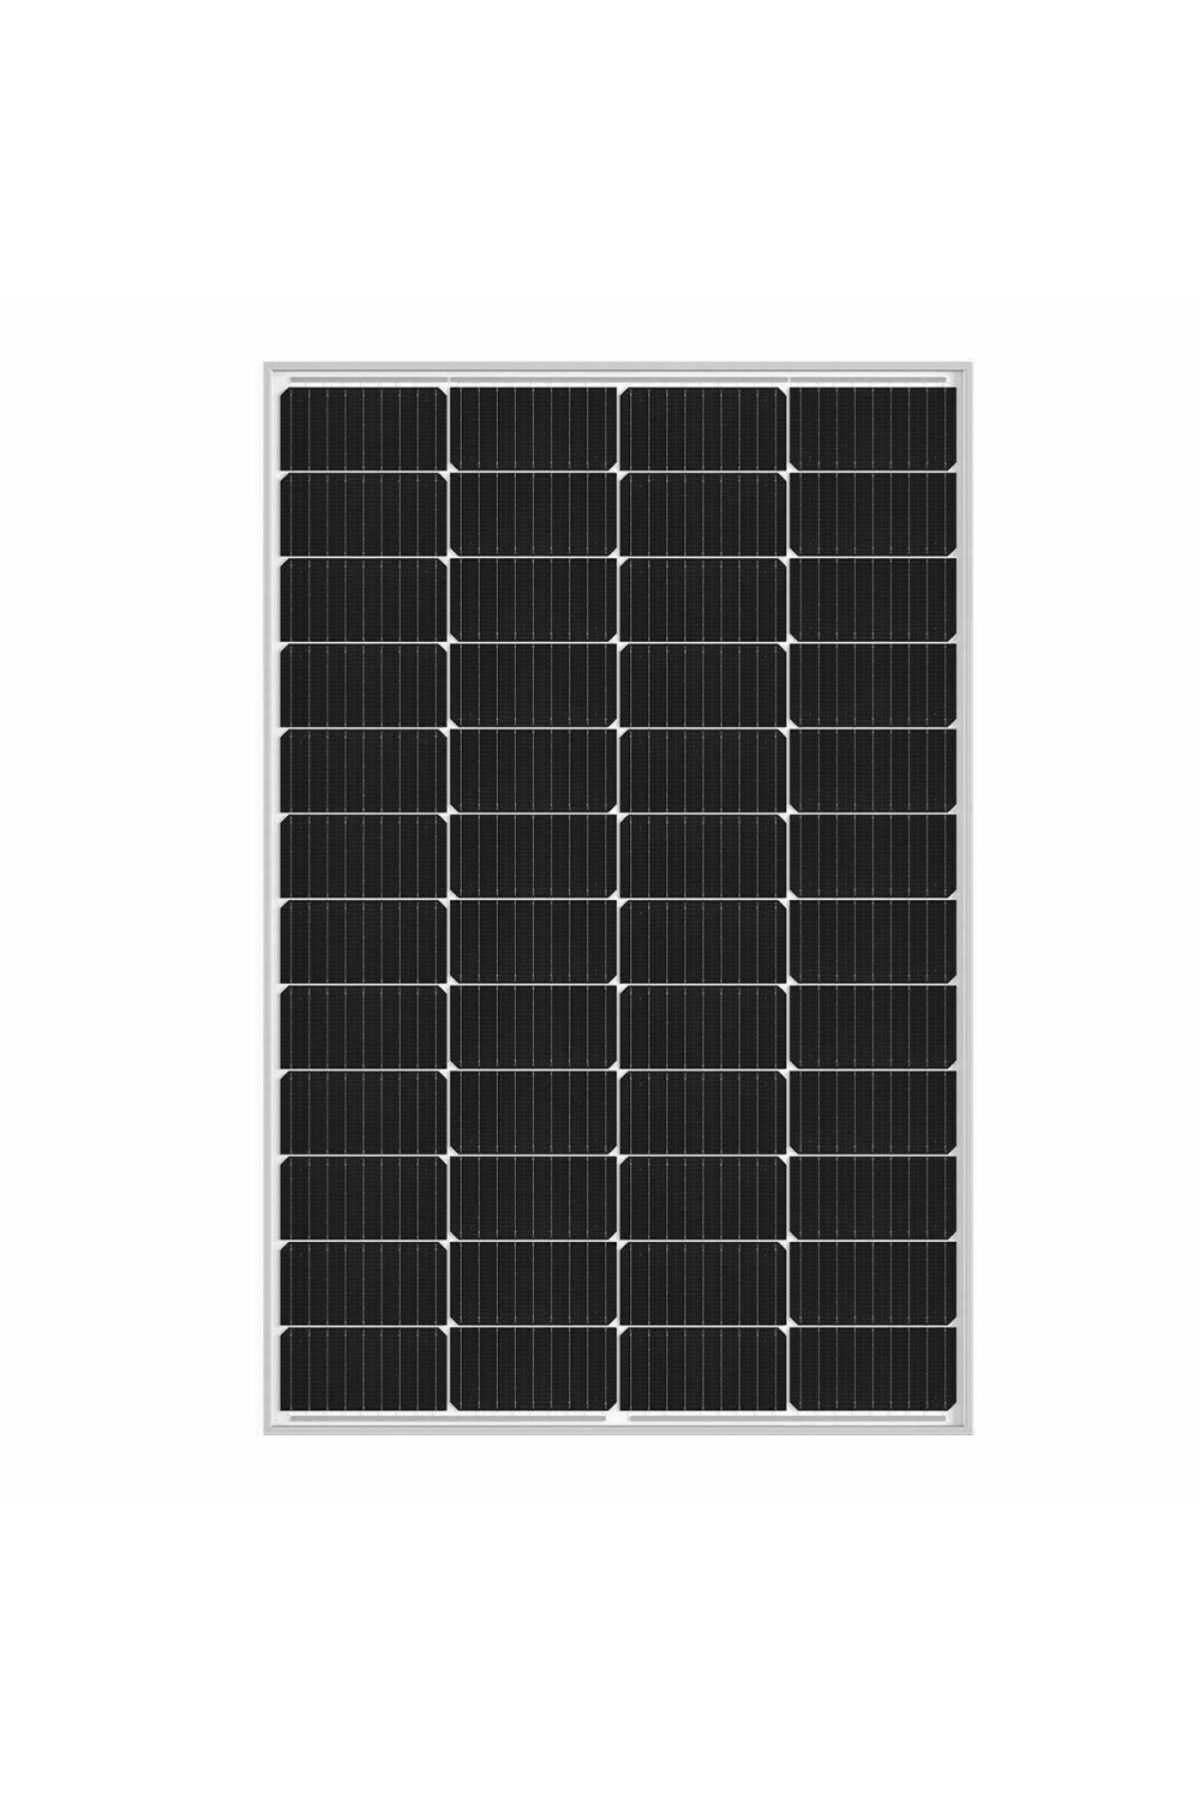 TommaTech 150 W Watt 48pm M6 Half Cut Multibusbar Güneş Paneli Solar Panel Monokristal